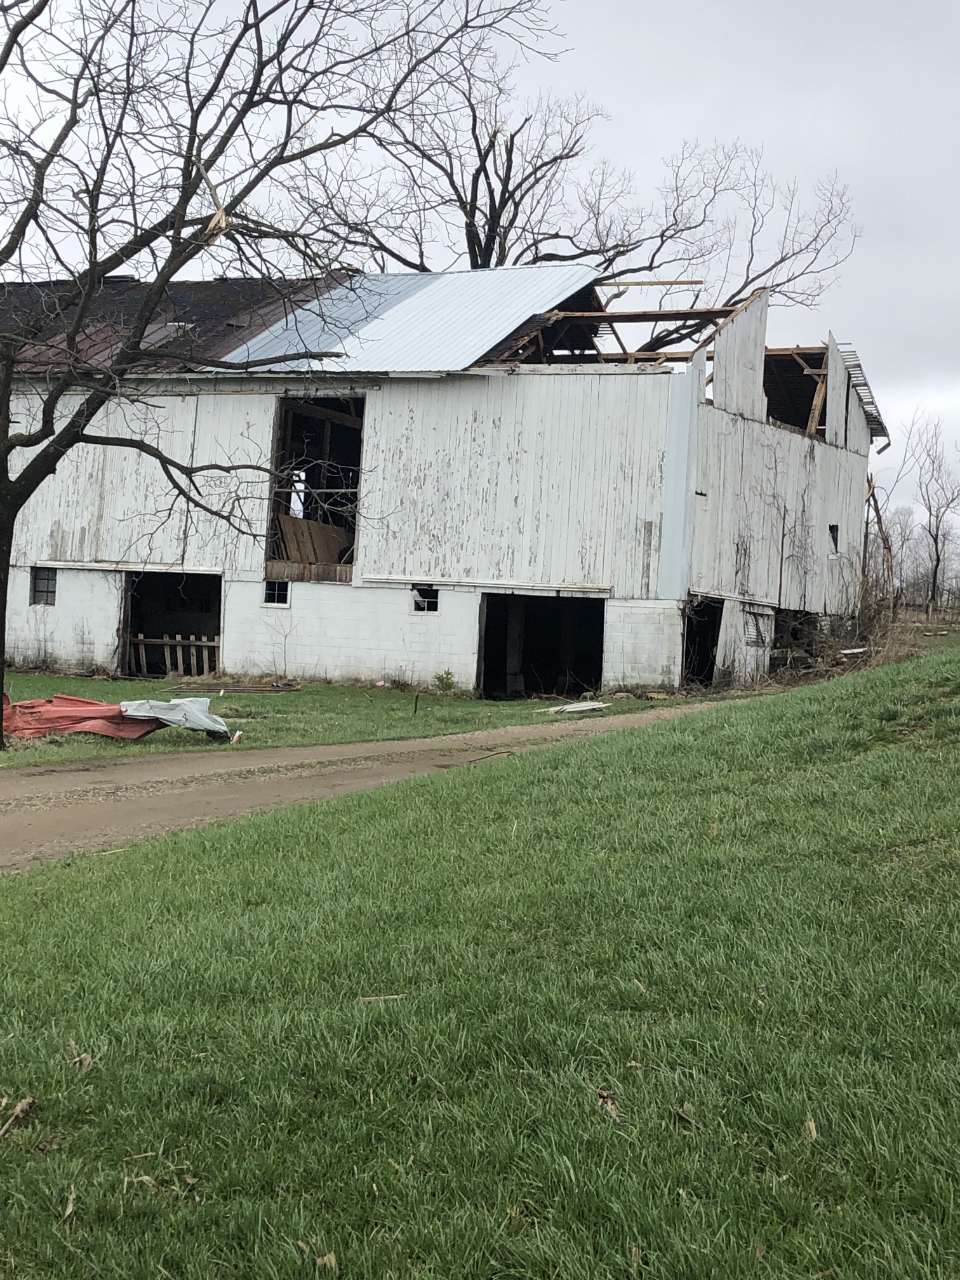 tornado damage near Shelby, OH April 14, 2019